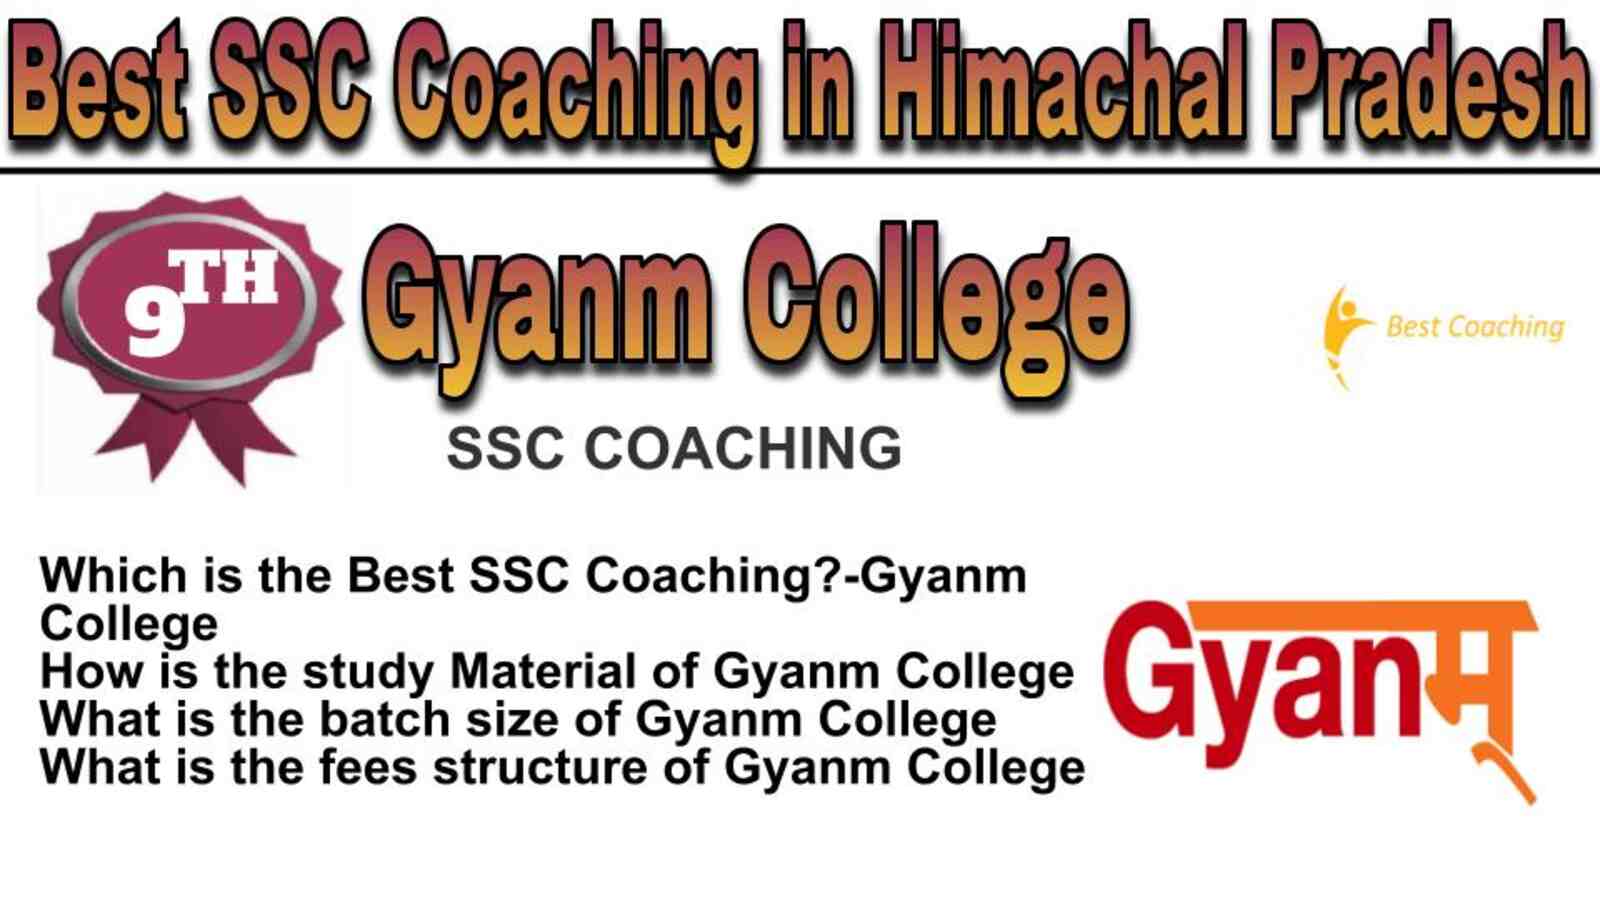 Rank 9 best SSC coaching in Himachal Pradesh